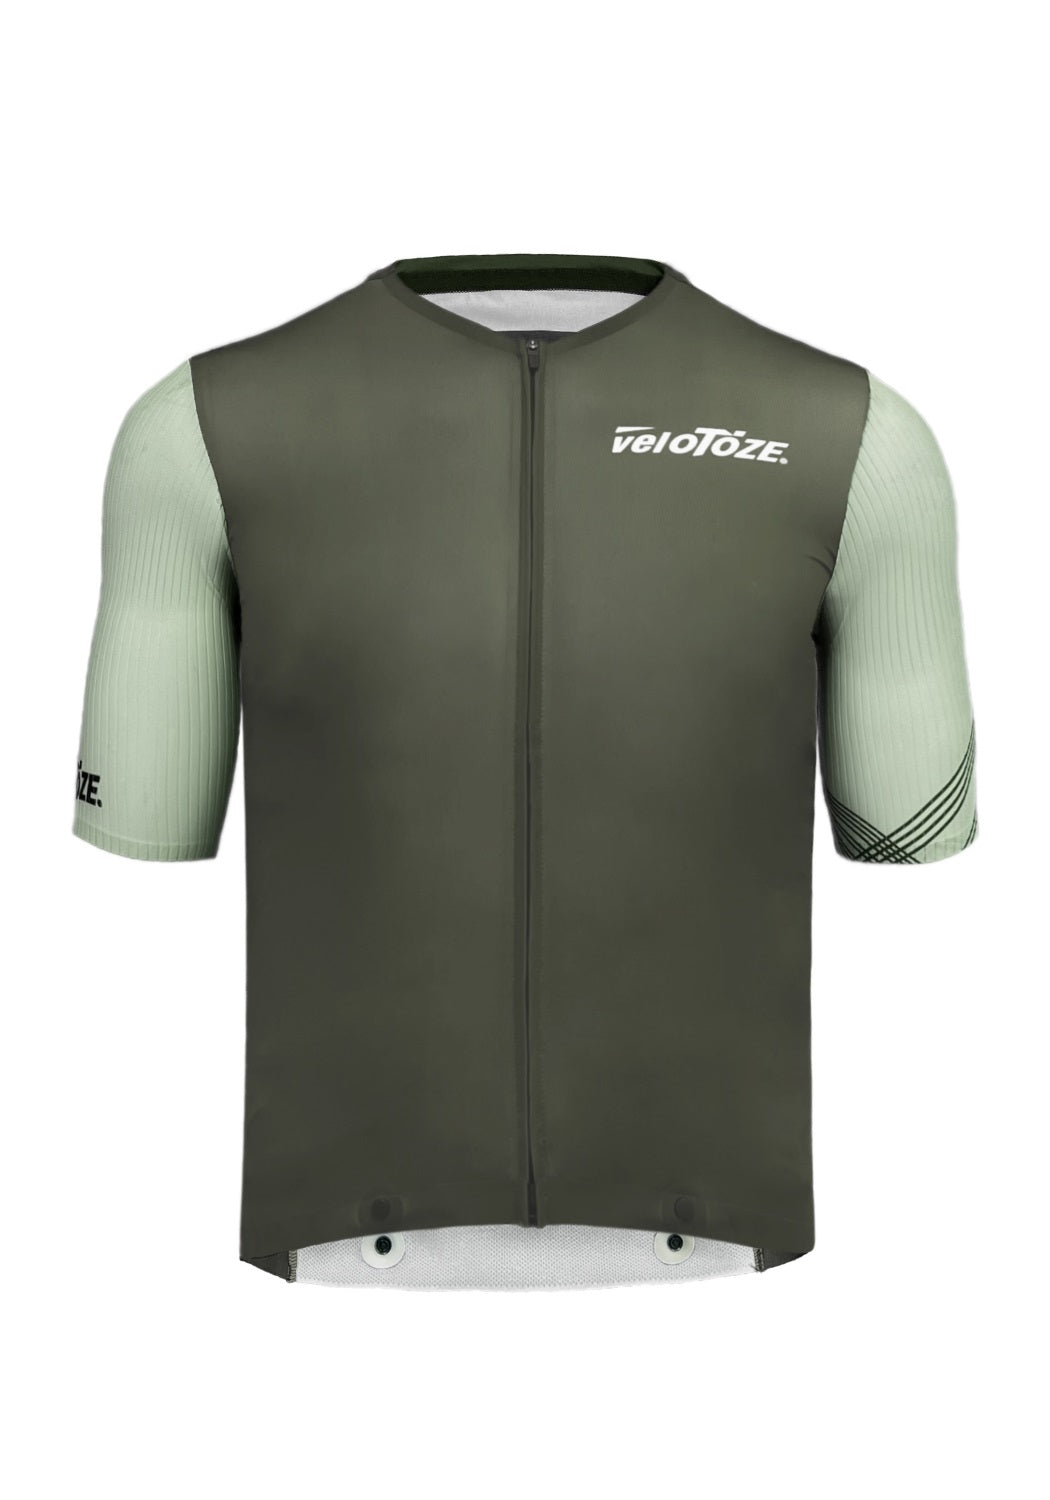 veloToze AeroLink™ Short Sleeves Jersey - Brown/Tan